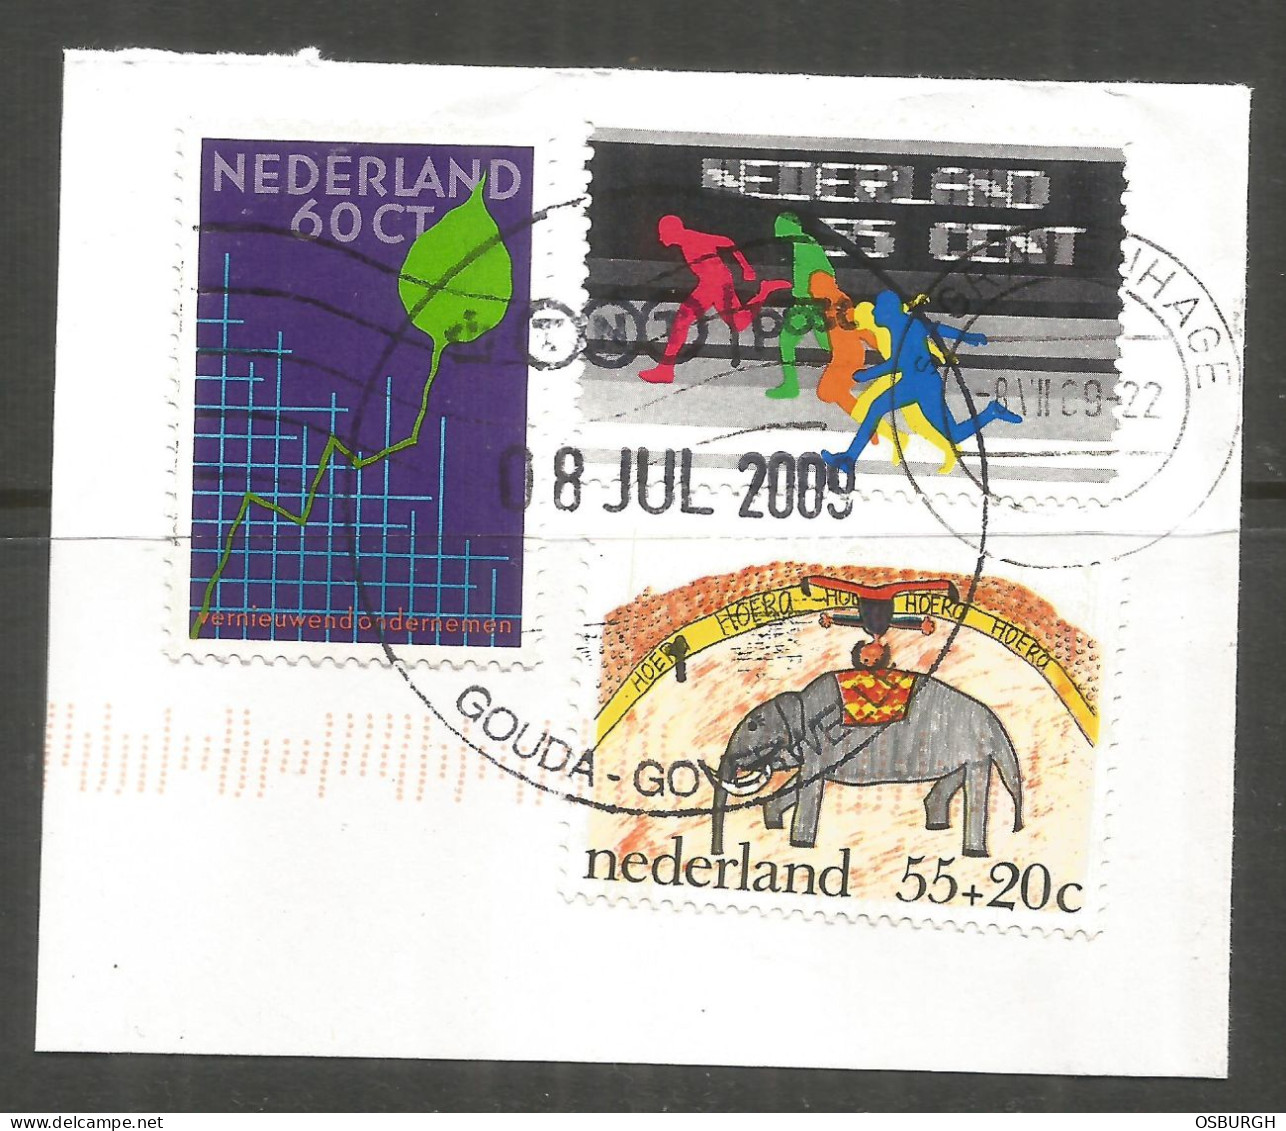 NETHERLANDS. 2009. STAMPS USED ON PIECE. GOUDA POSTMARK. ELEPHANT. - Usati